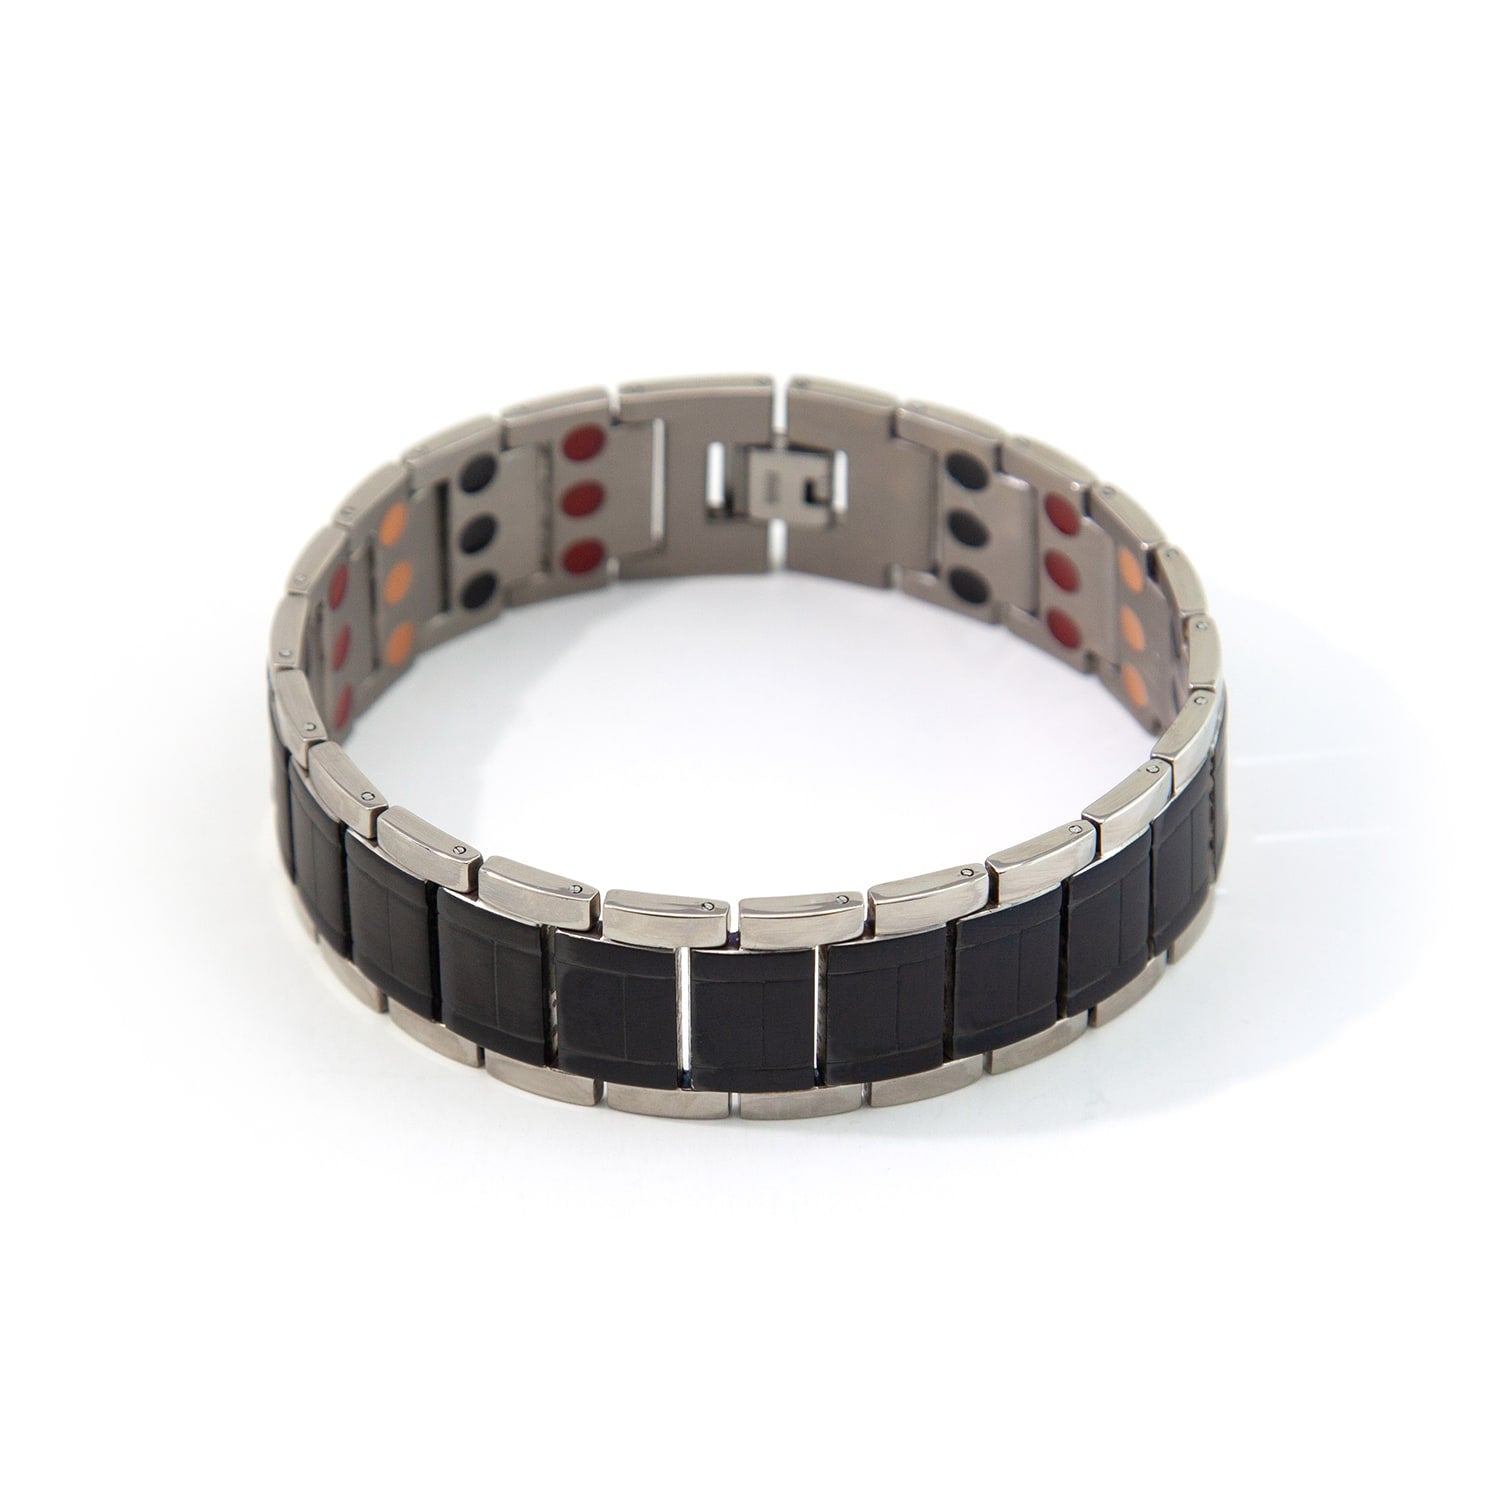 Bracelet Led Rechargeable, 4 Pack Reflective Led Bracelets Lumineux Li